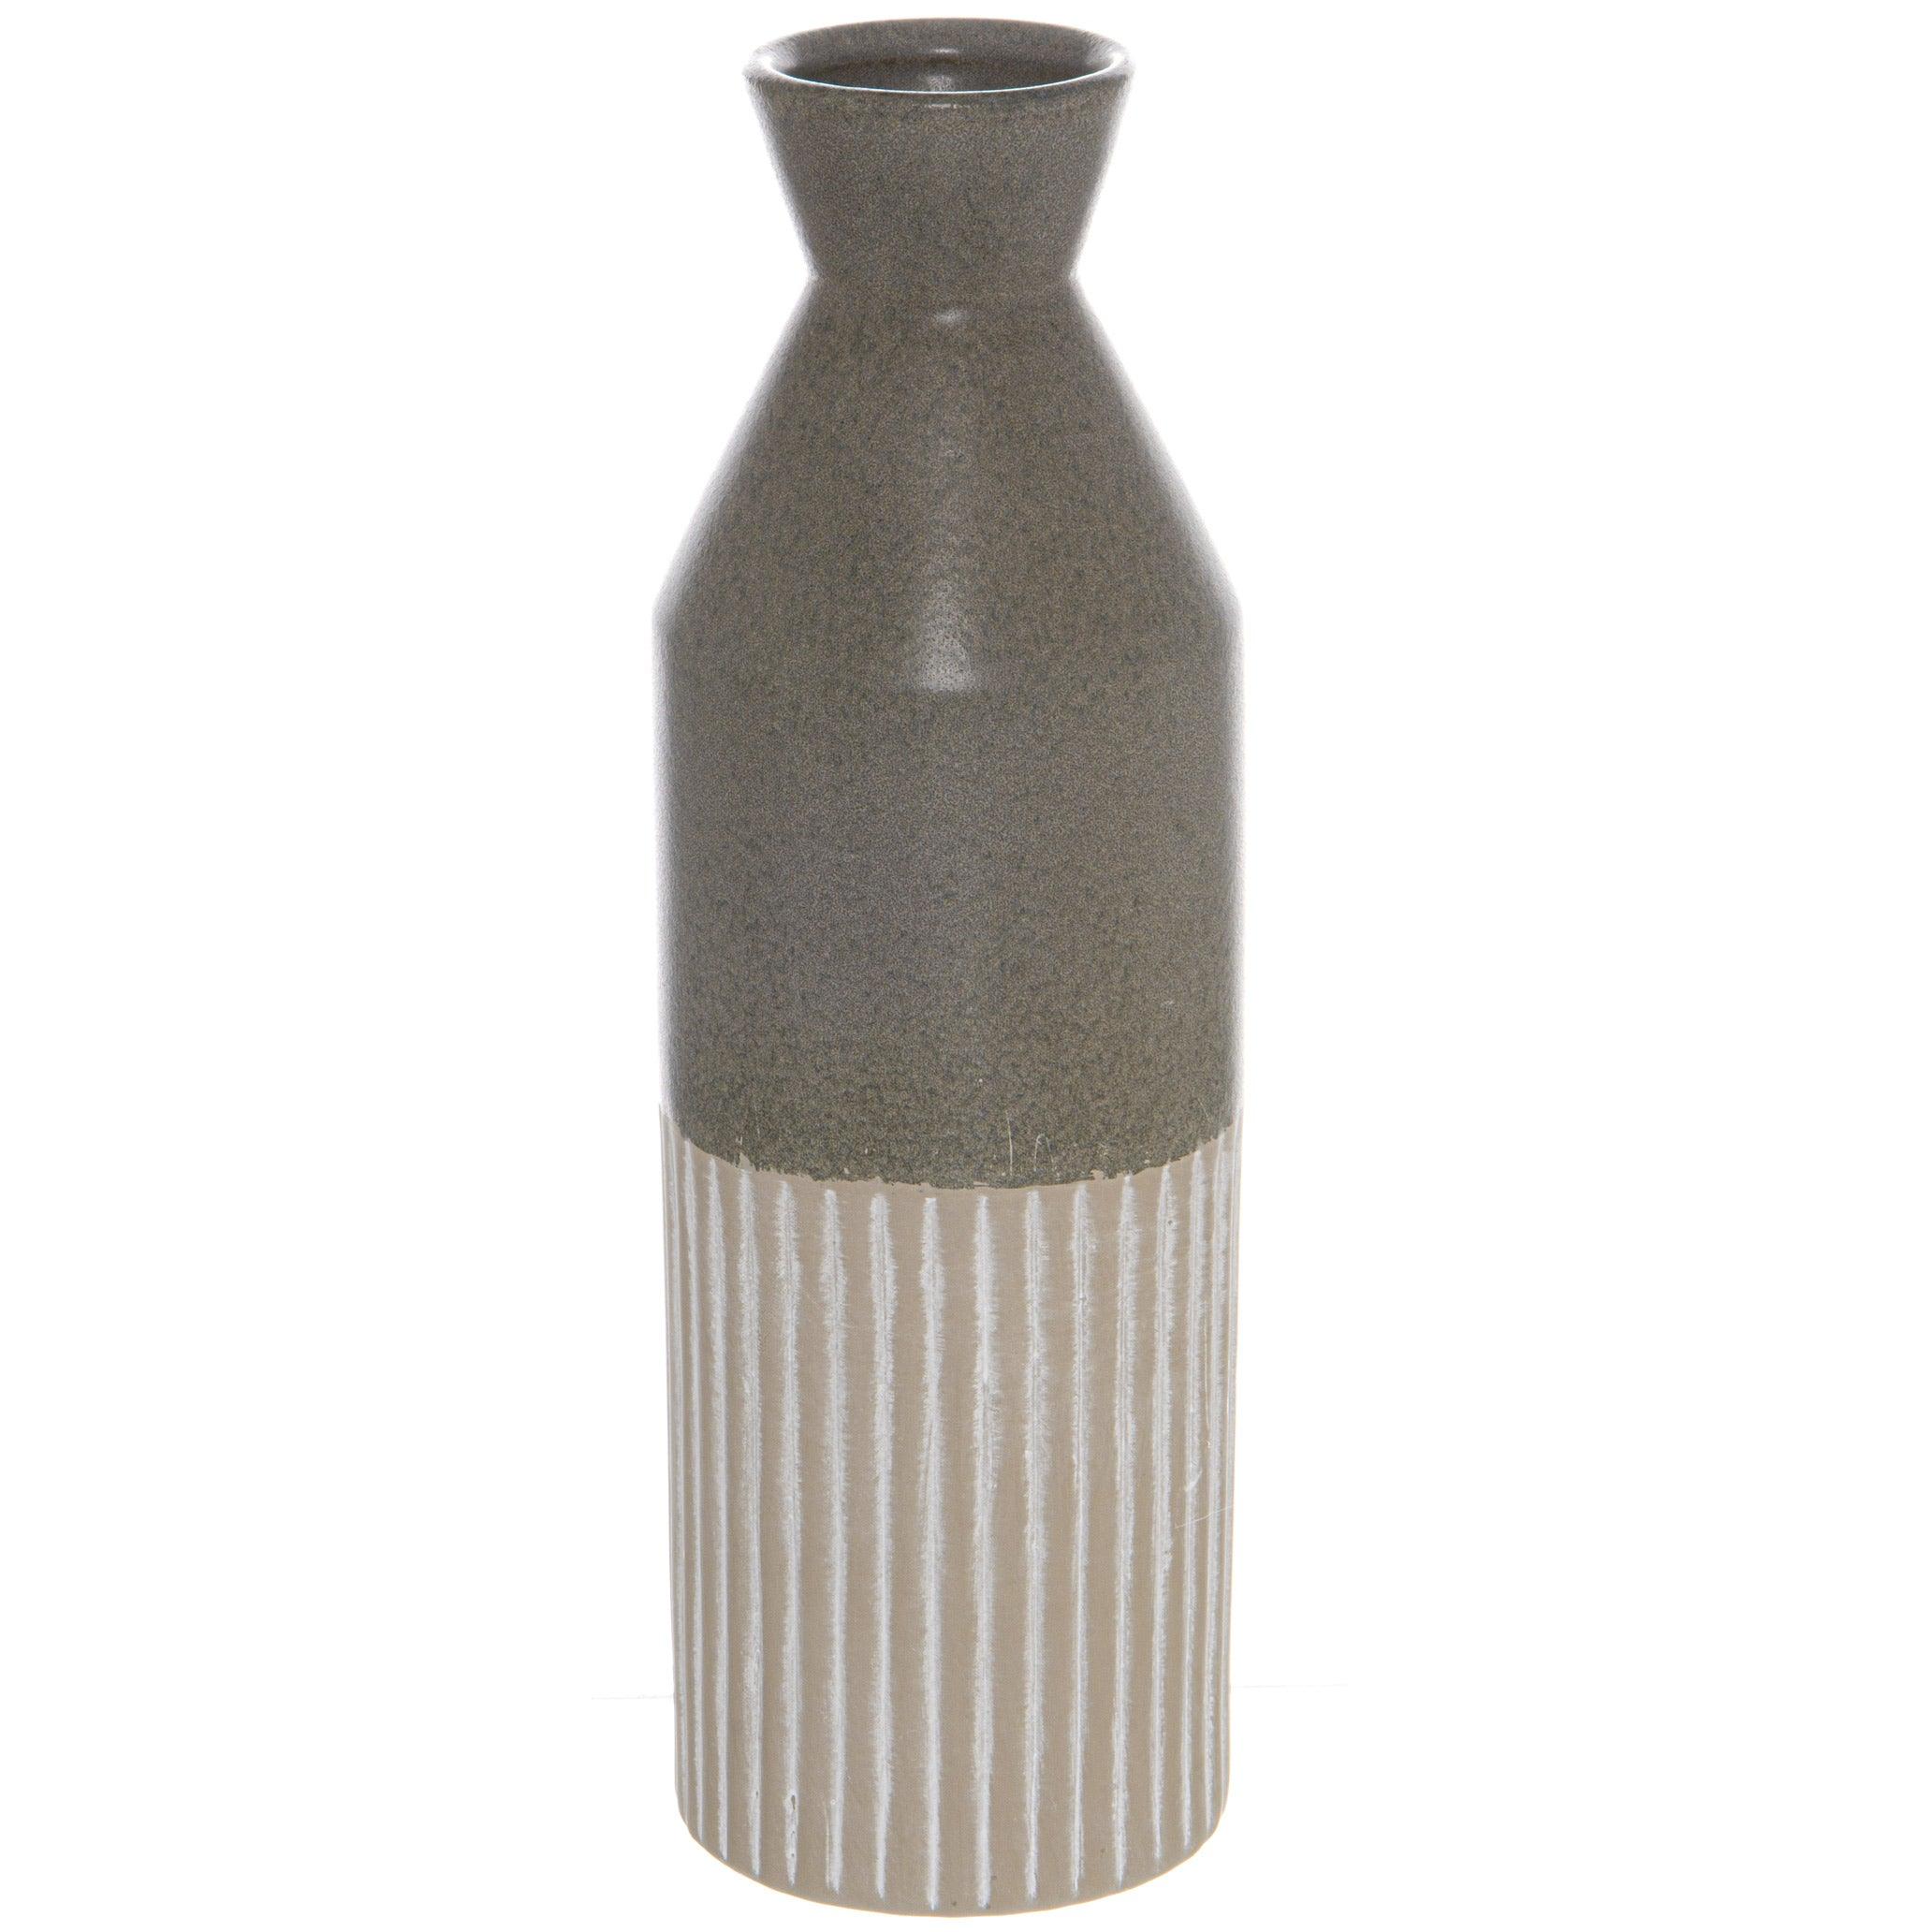 View Mason Collection Grey Ceramic Ellipse Tall Vase information